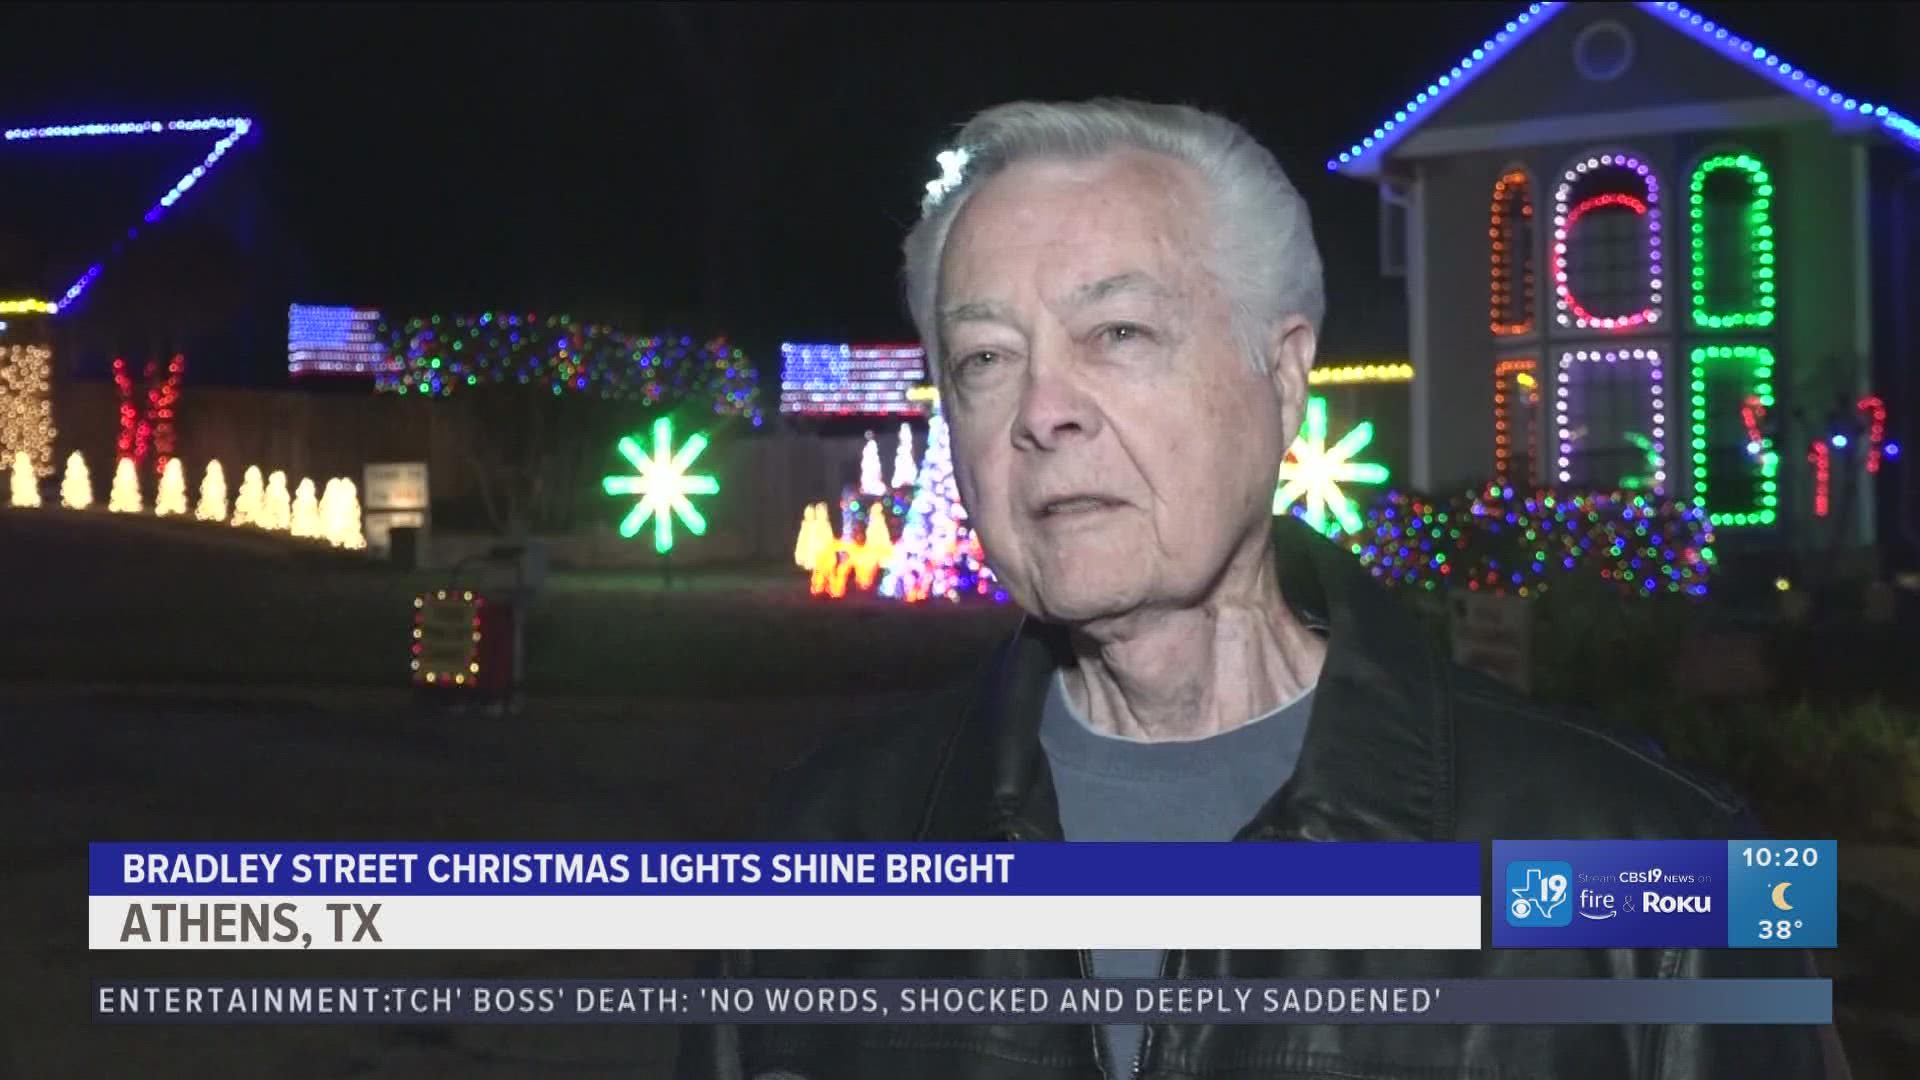 Bradley Street Christmas Lights shine bright